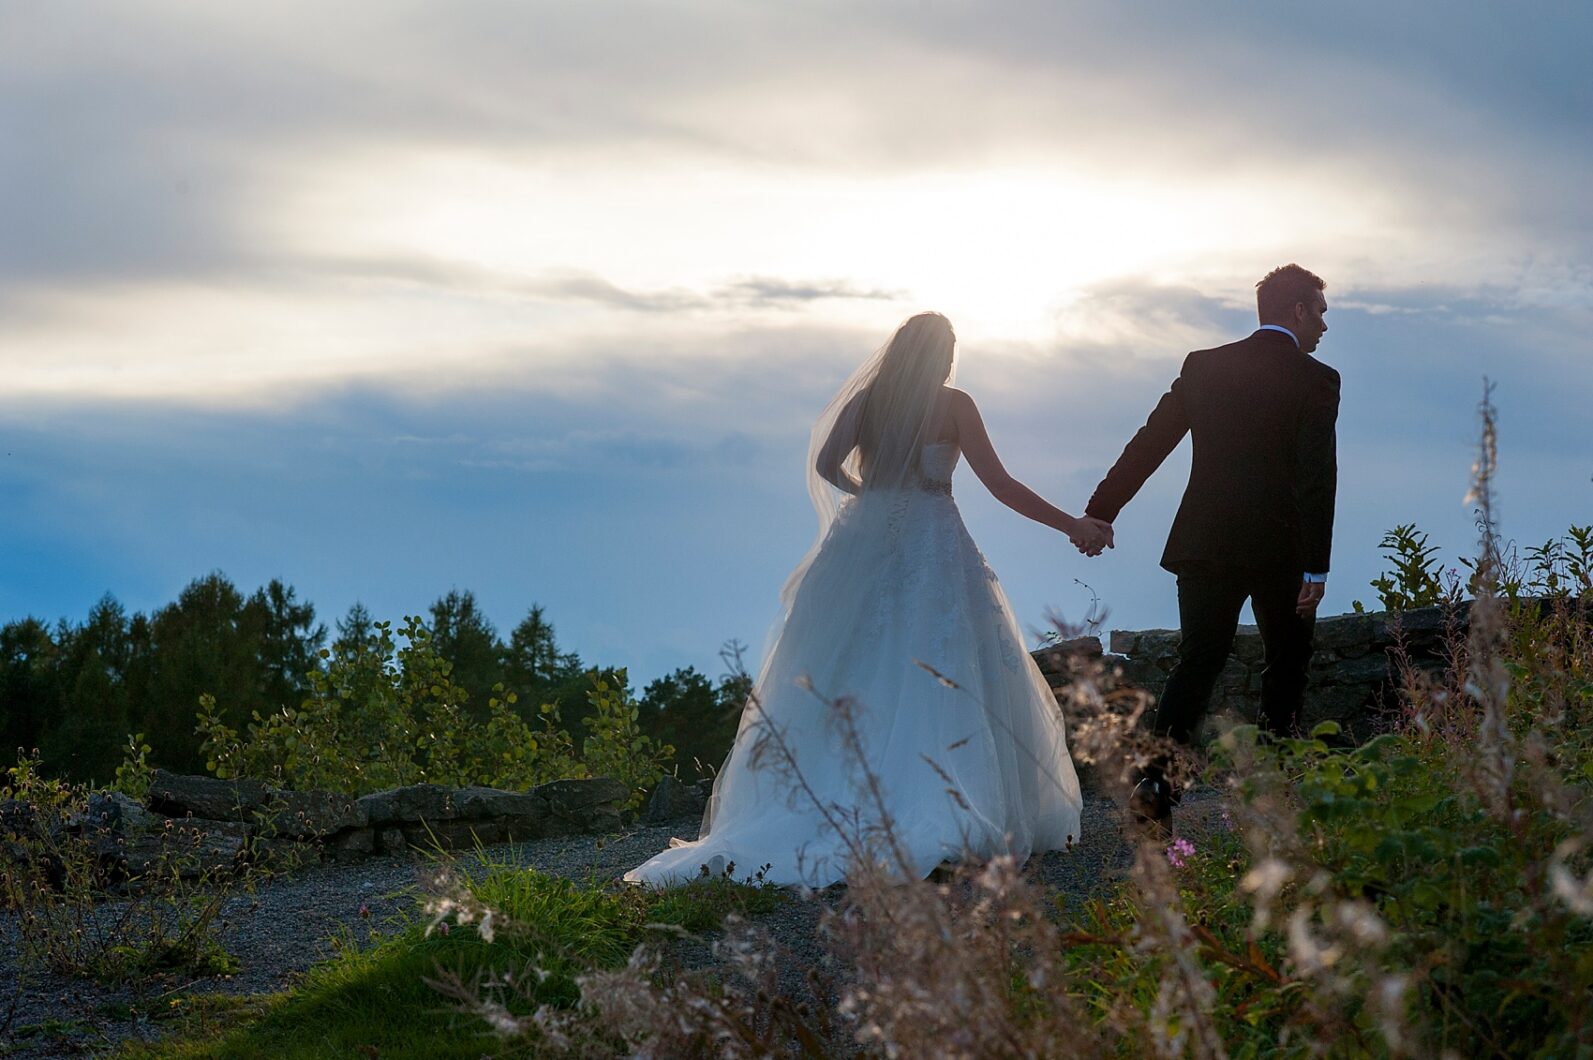 Bergen, Norway sunset wedding photo by destination wedding photographer Mikkel Paige photography.